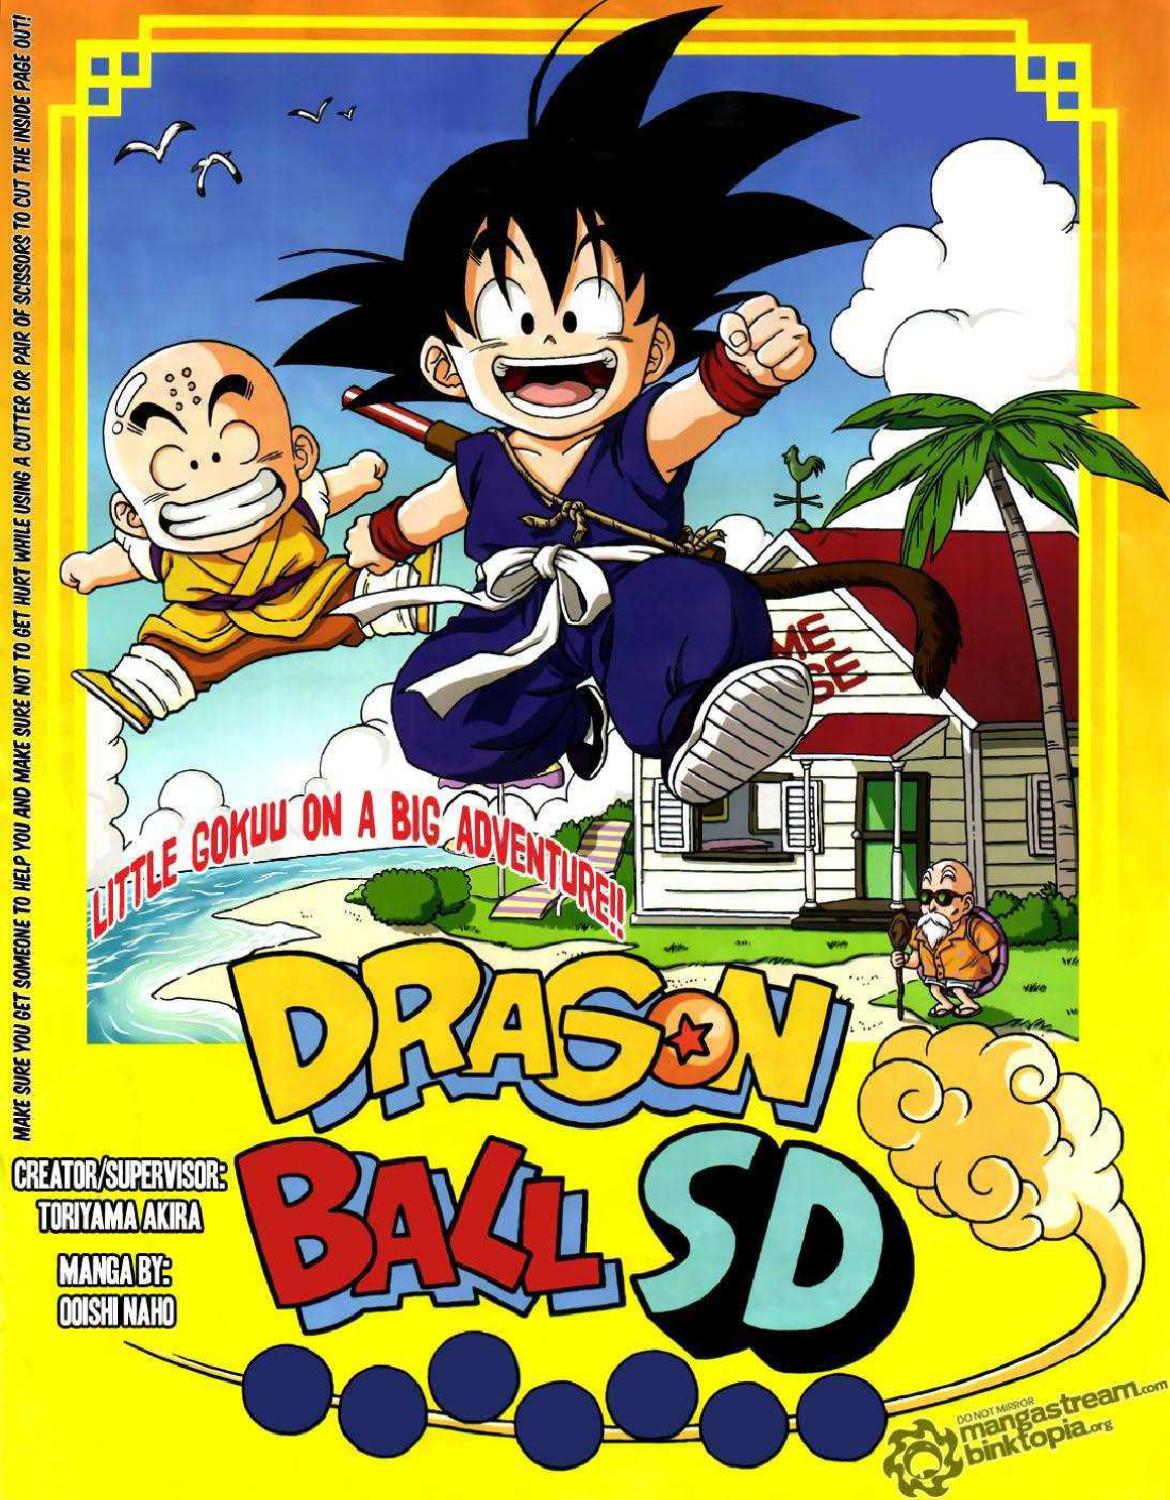 Dragon Ball SD (manga) | Wiki Dragon Ball | Fandom